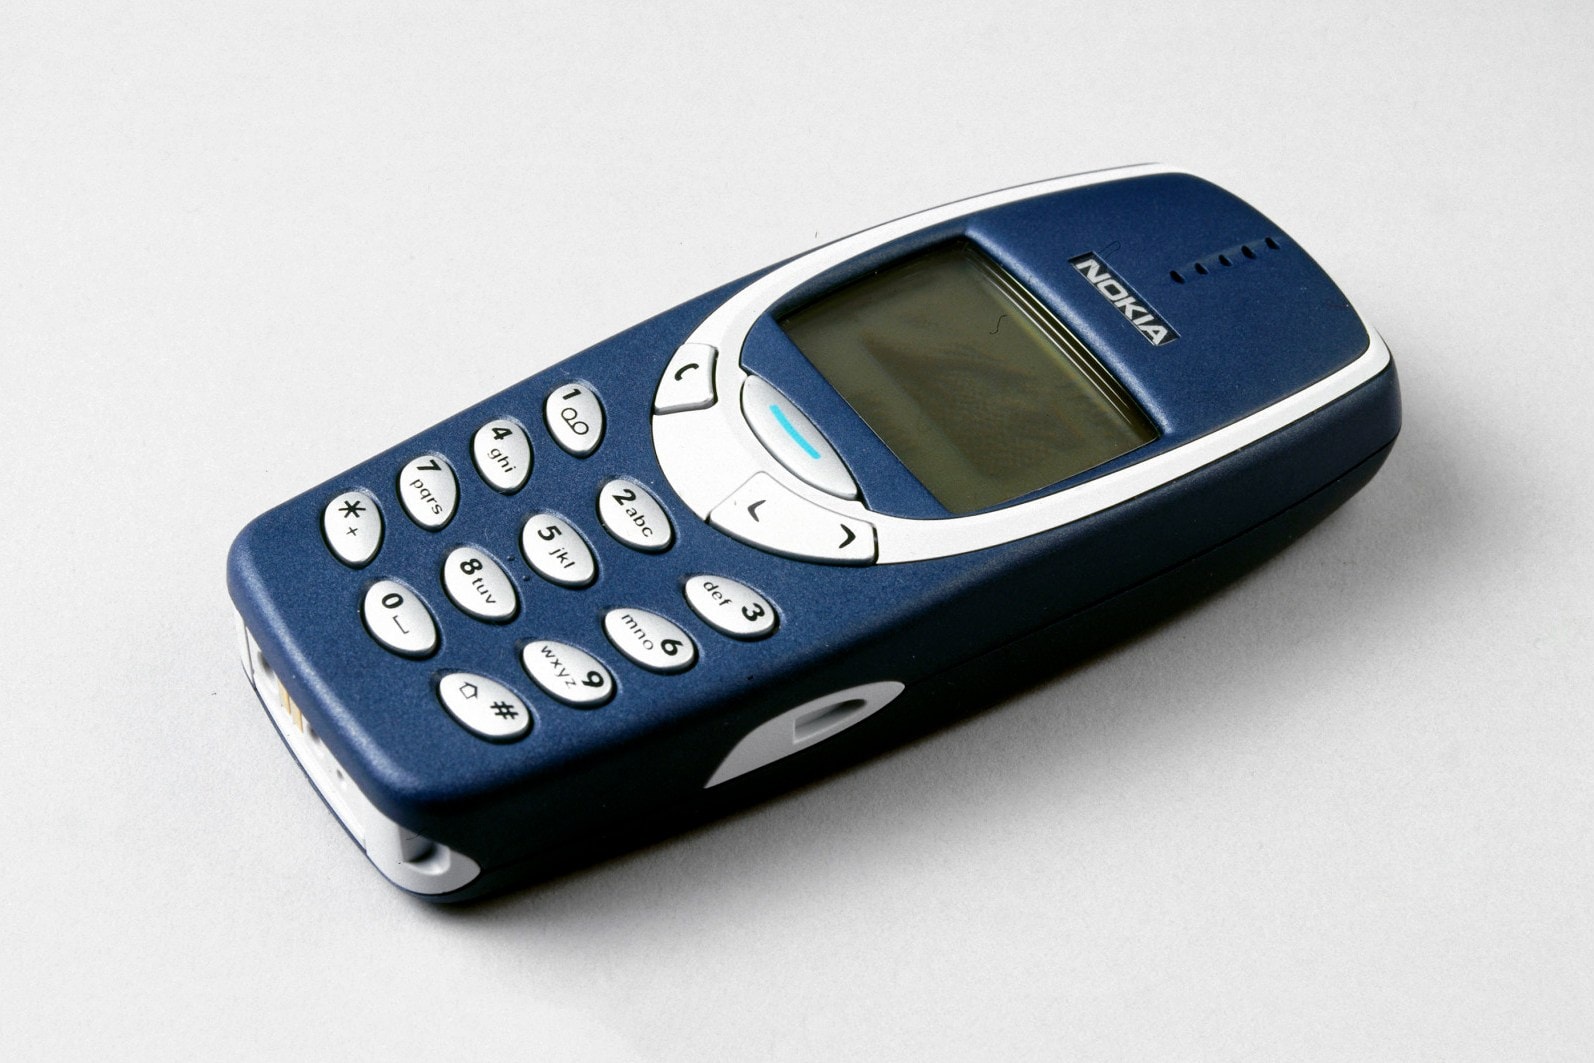 Nokia 3310 Re-release